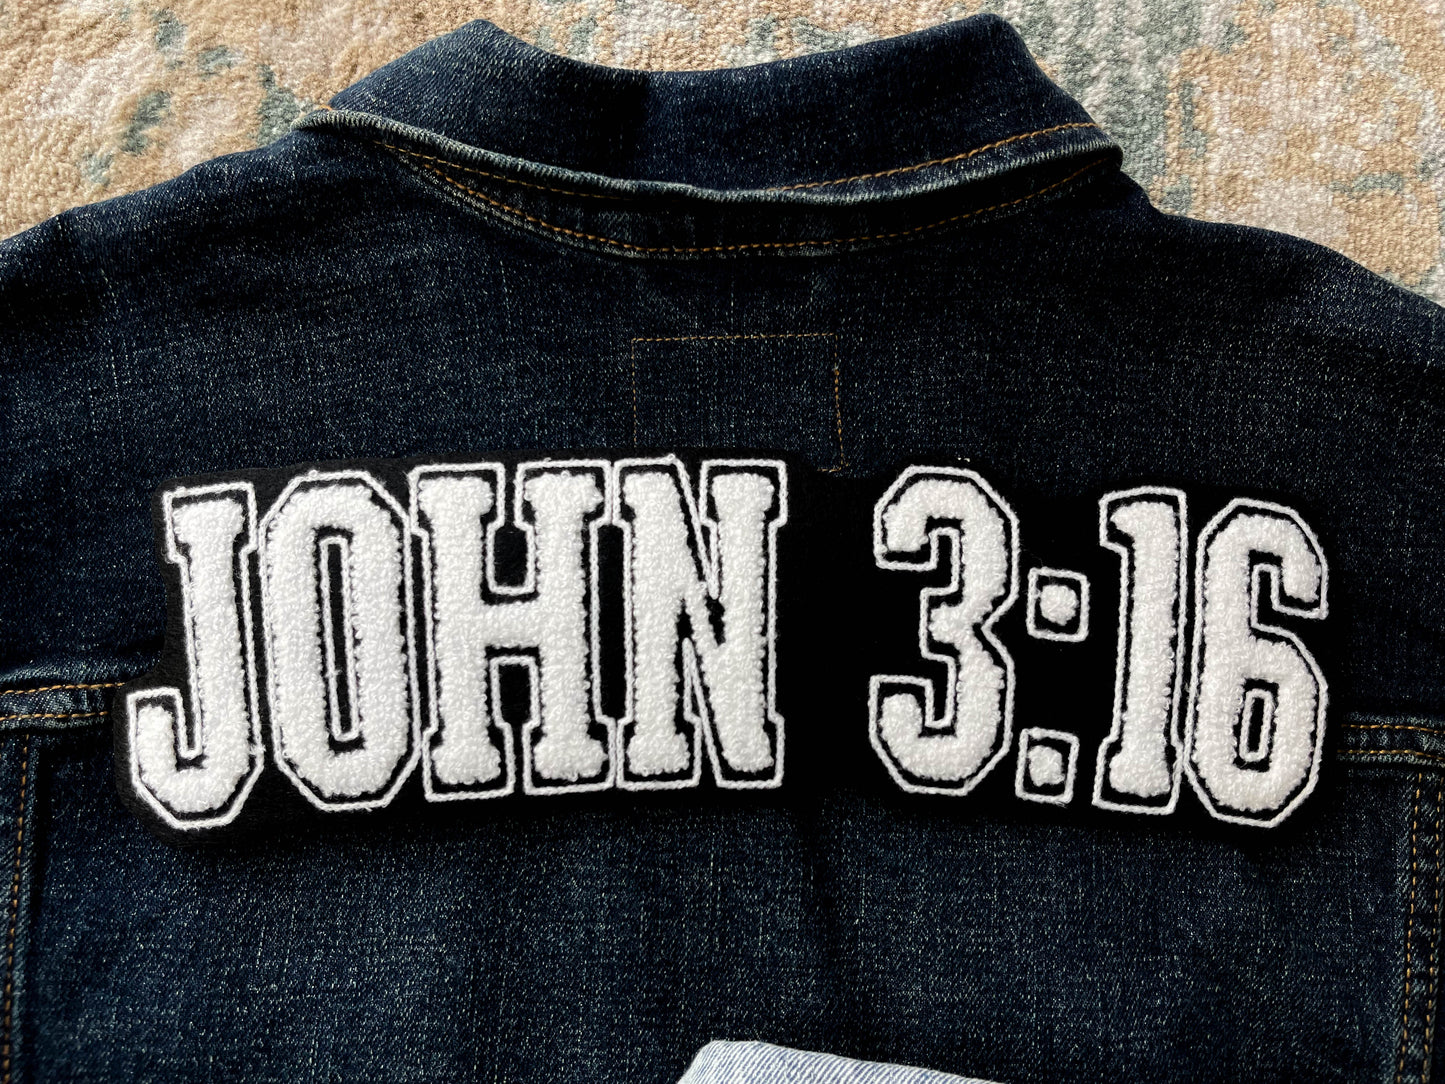 John 3:16 Patch